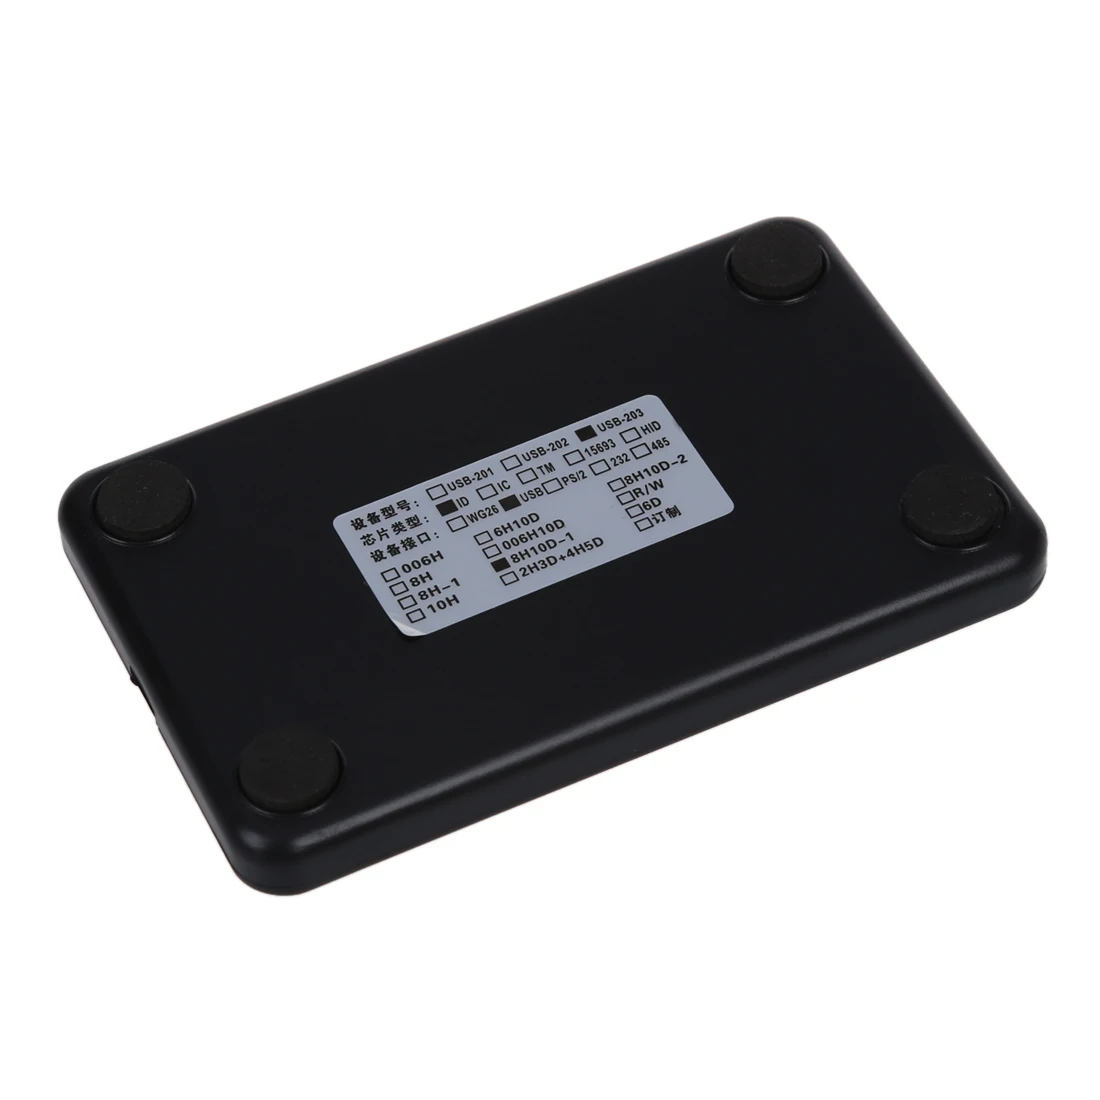 USB RFID Desktop ID Card Reader бесконтактных карт